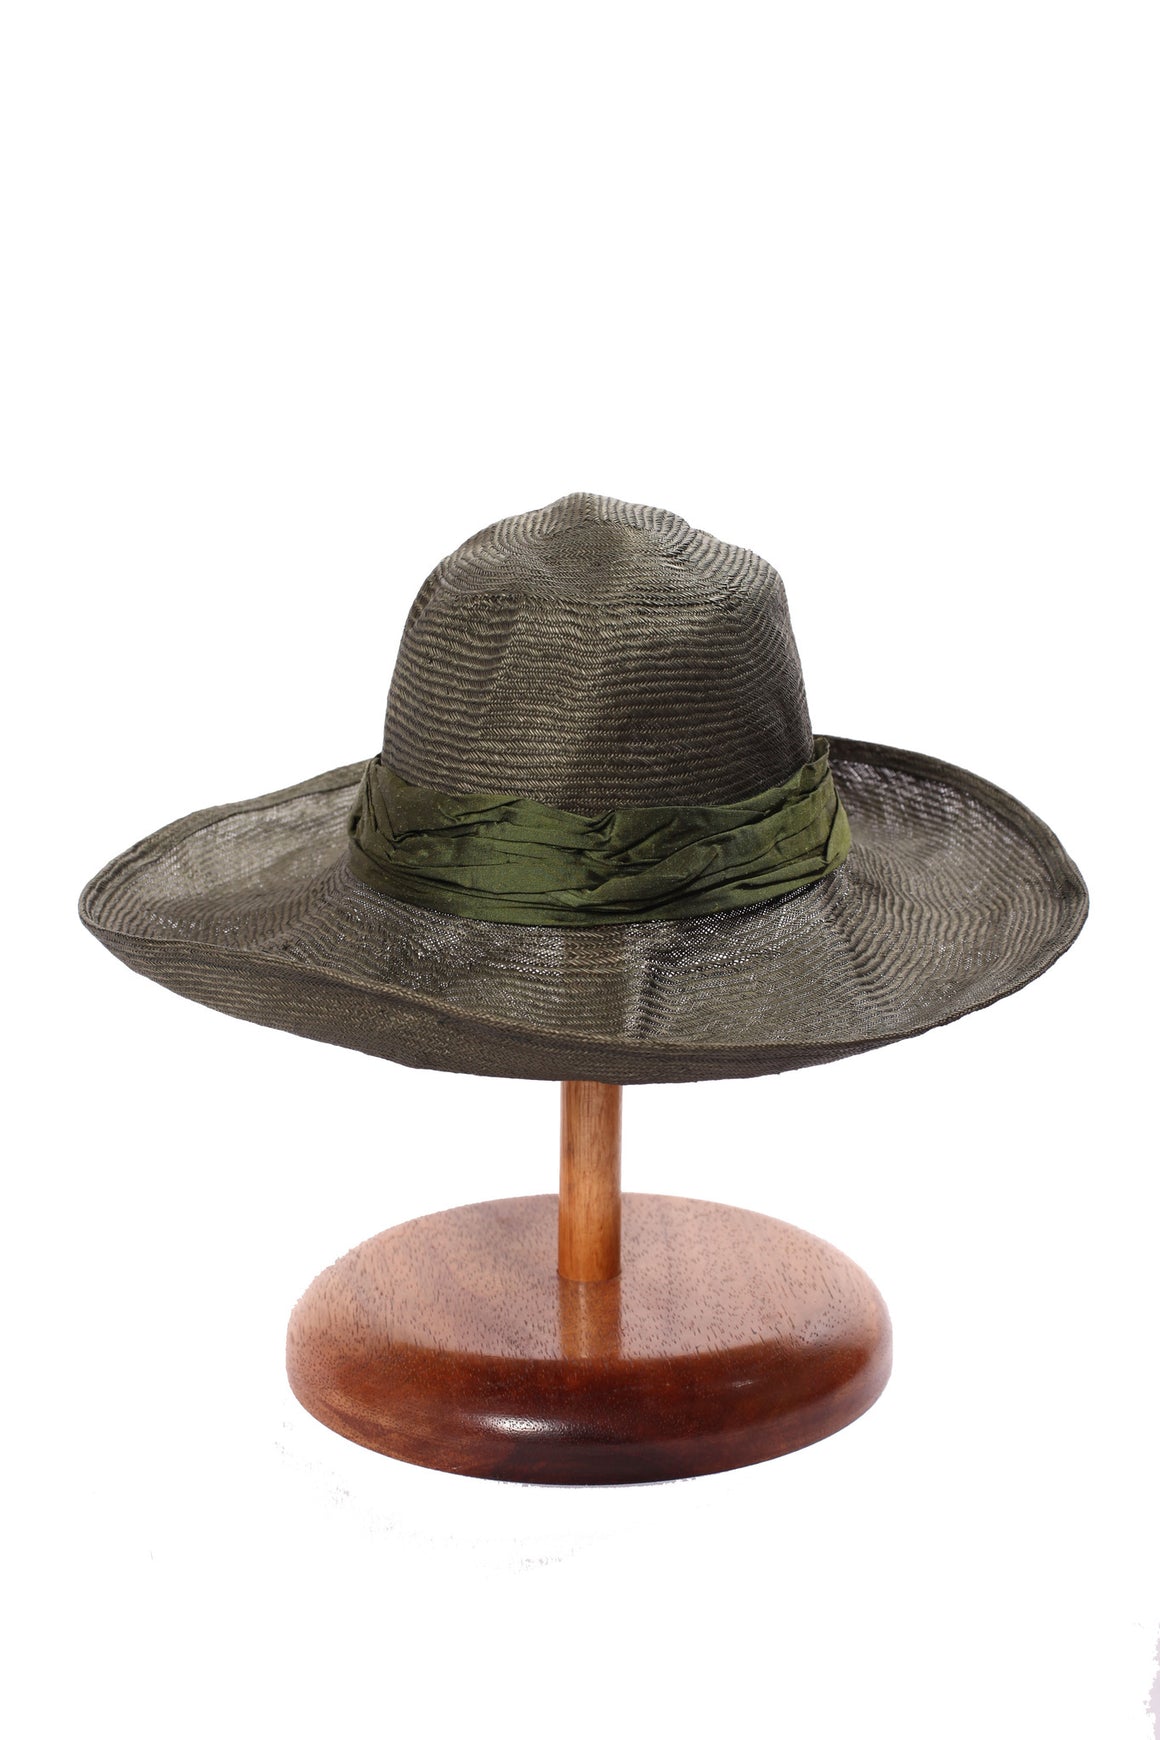 Maya Neumann Squash Hat - Green